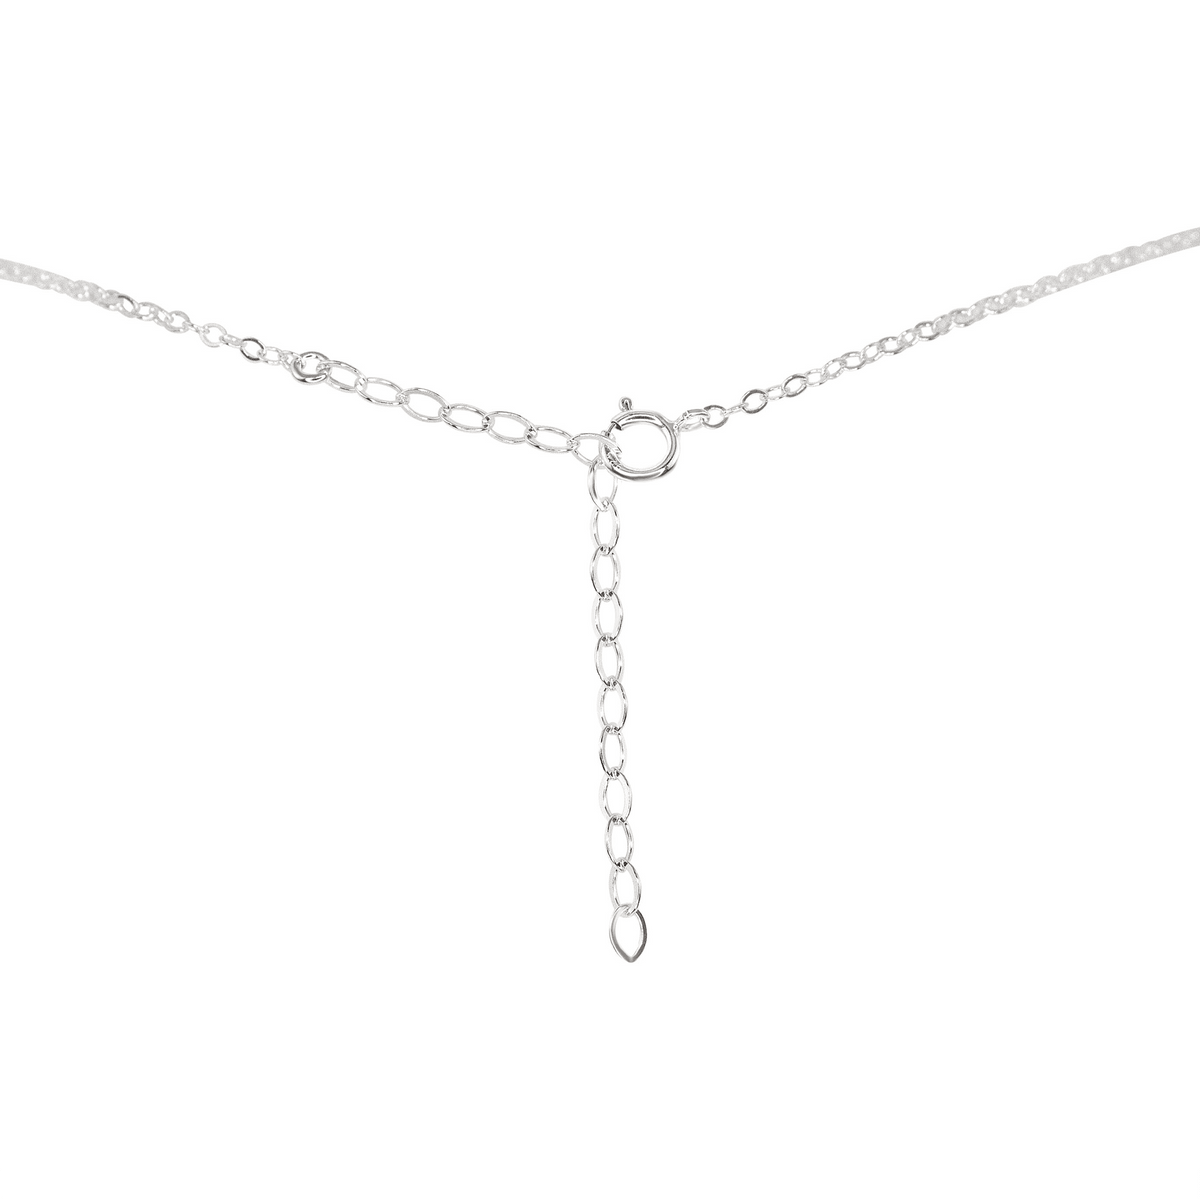 Apatite Boho Lariat Necklace - Apatite Boho Lariat Necklace - Sterling Silver - Luna Tide Handmade Crystal Jewellery